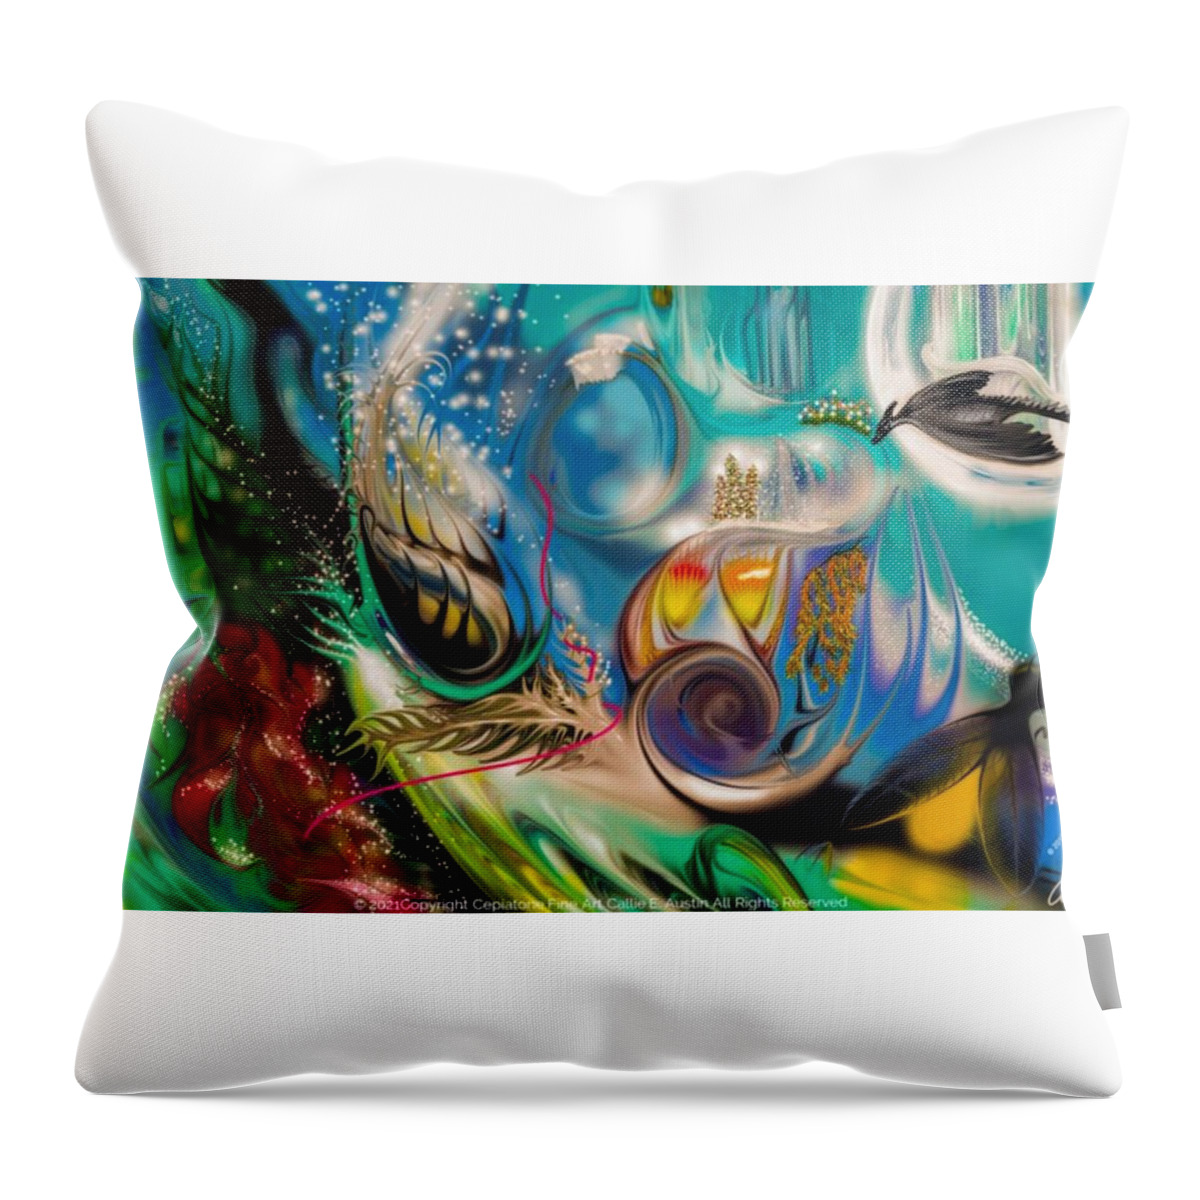 Wall Art Throw Pillow featuring the digital art Dragon day by Cepiatone Fine Art Callie E Austin